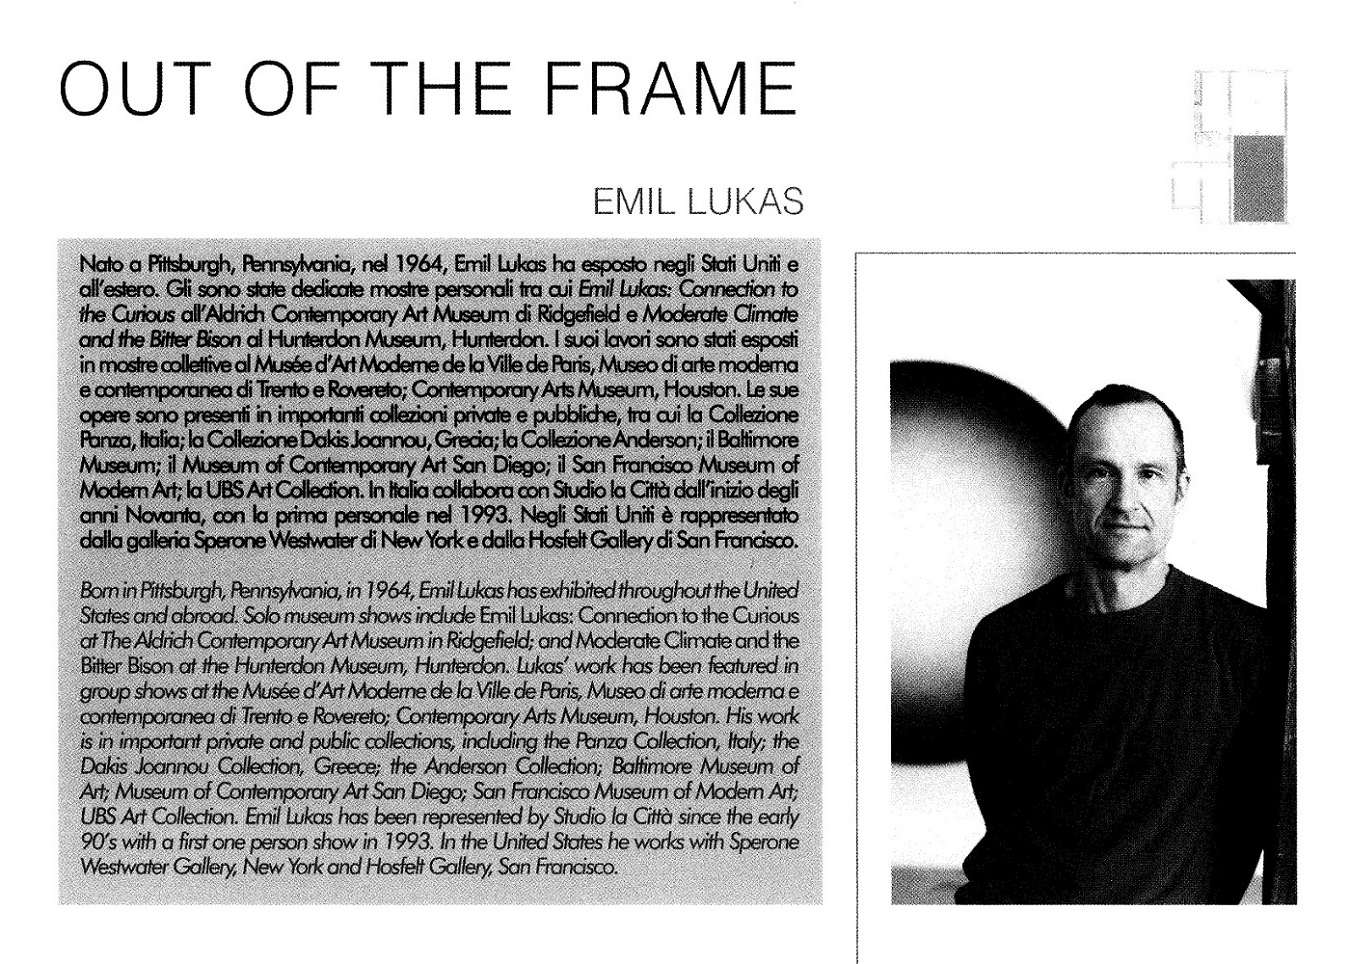 Emil Lukas Biography page 1